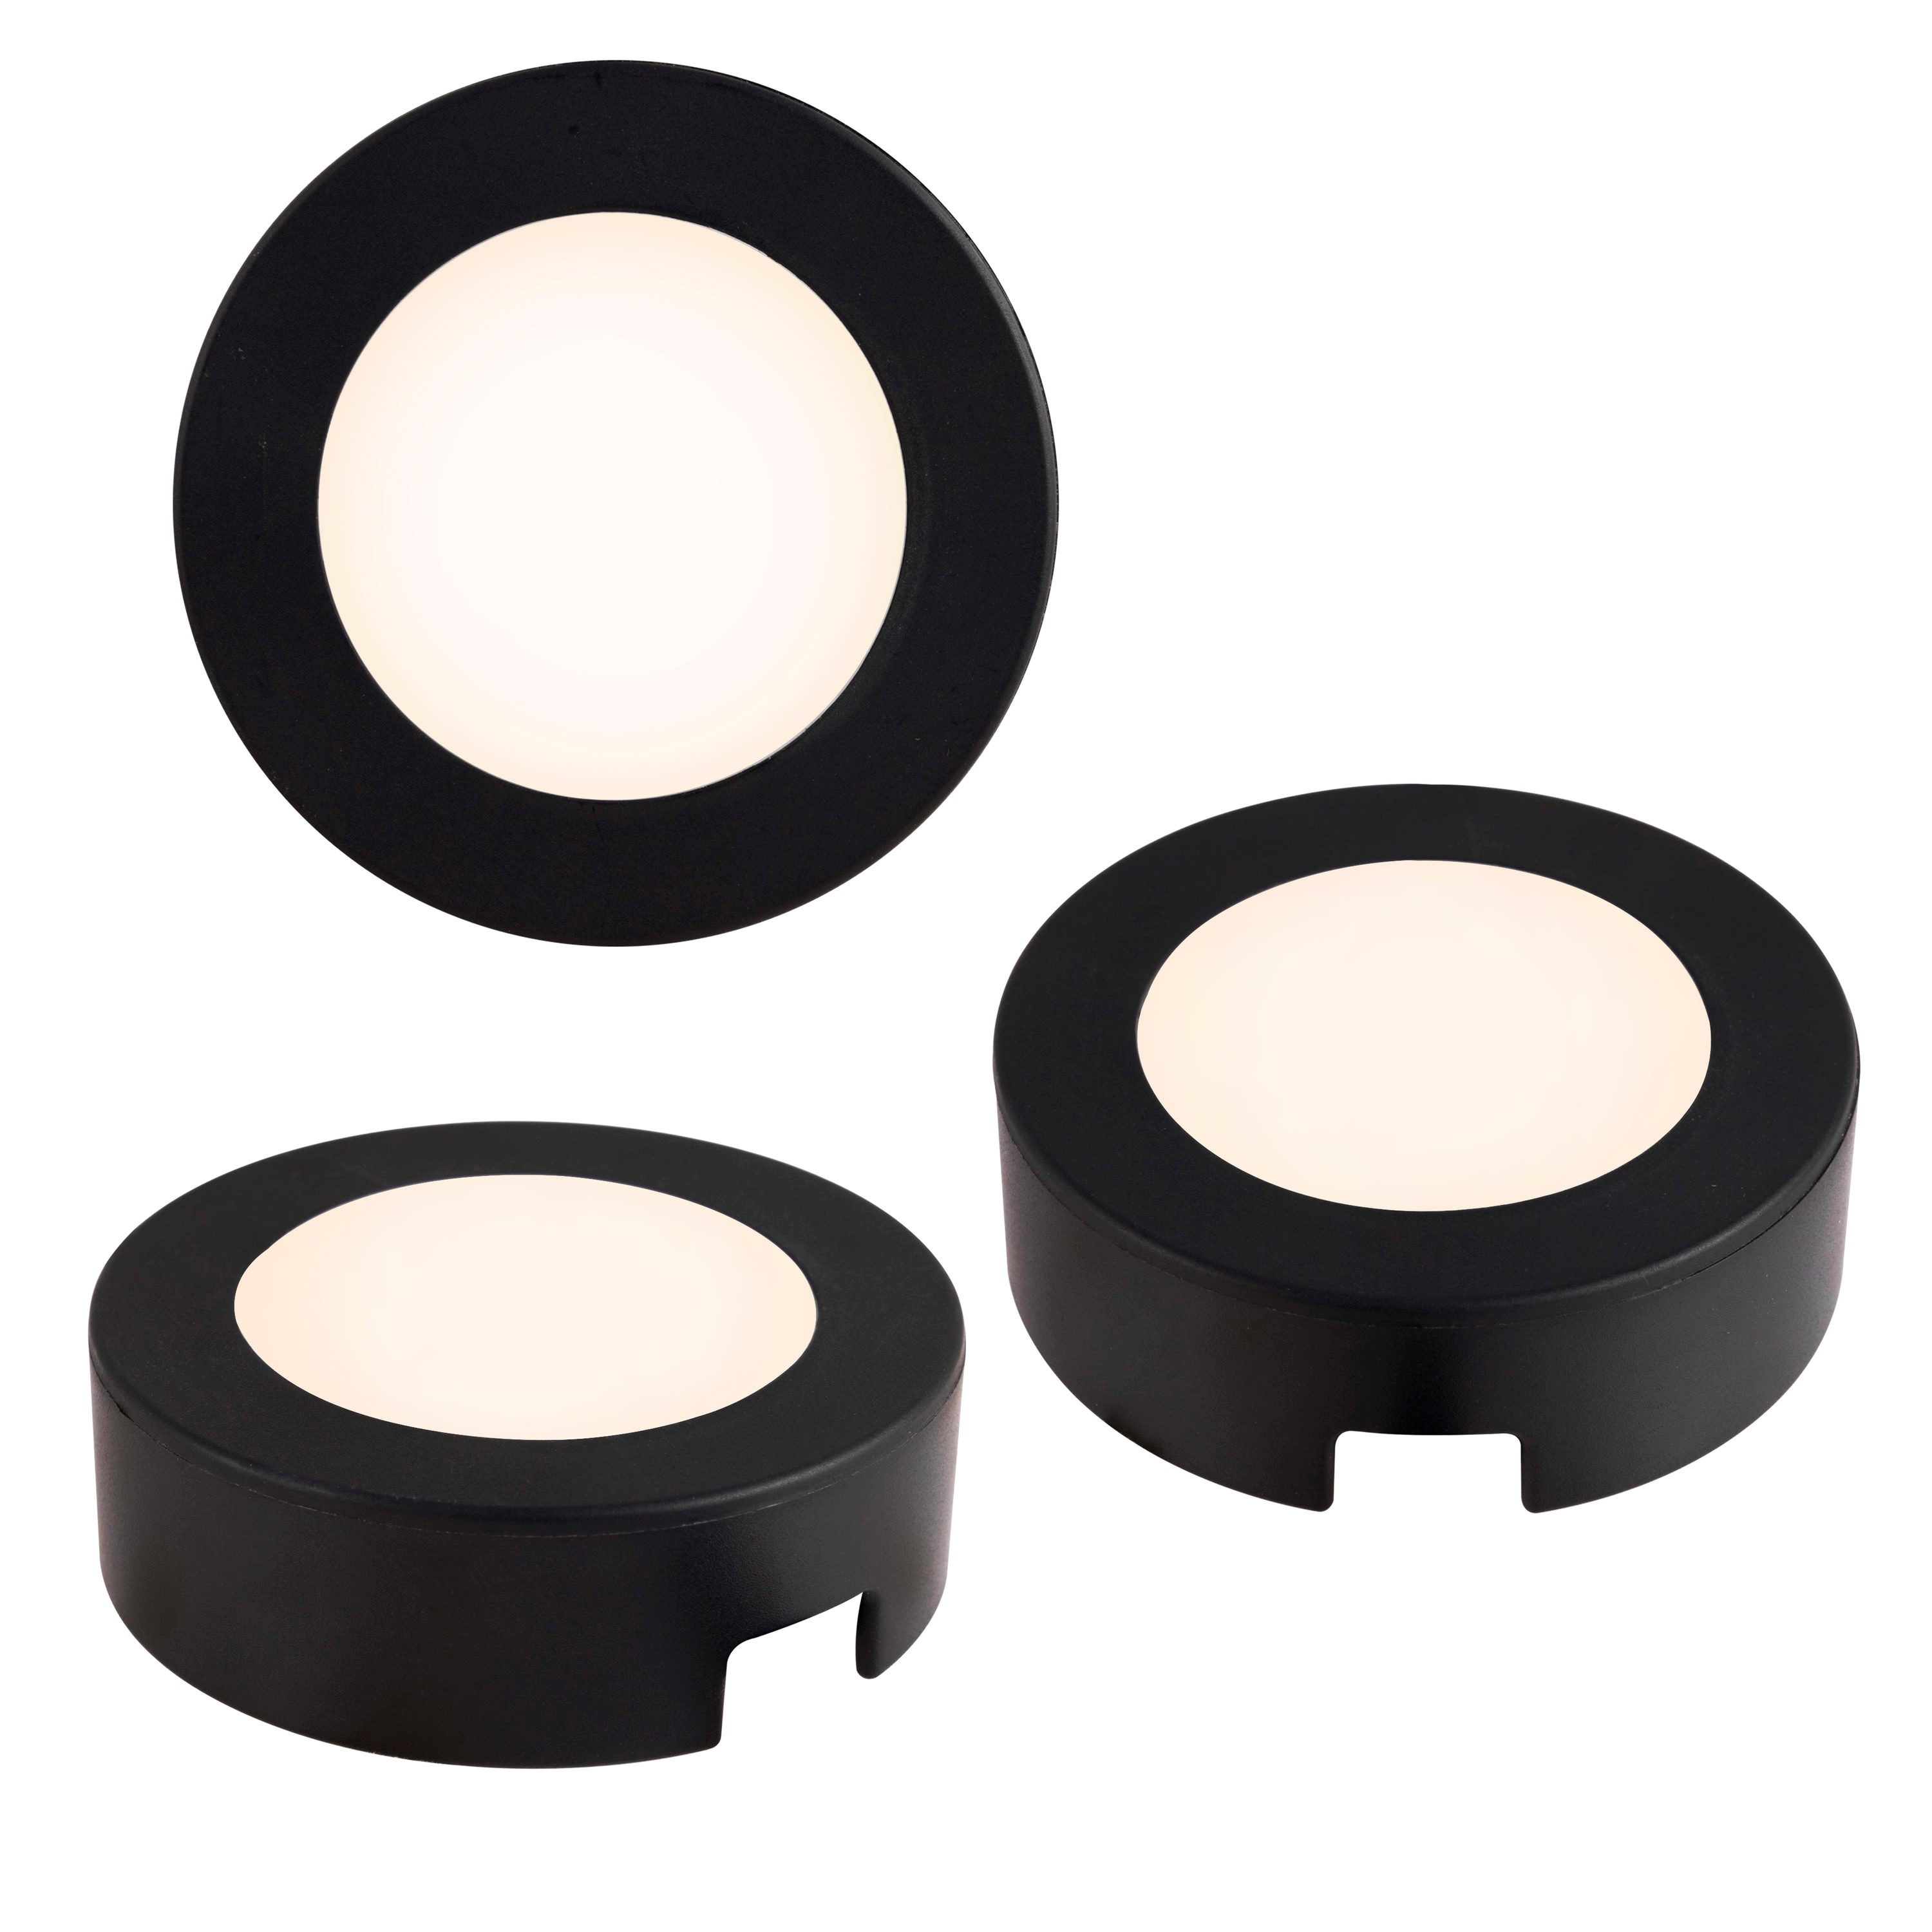 Black+decker 3-Pack LED Puck Light Kit, Warm White (LEDUC-PUCK-3WK)